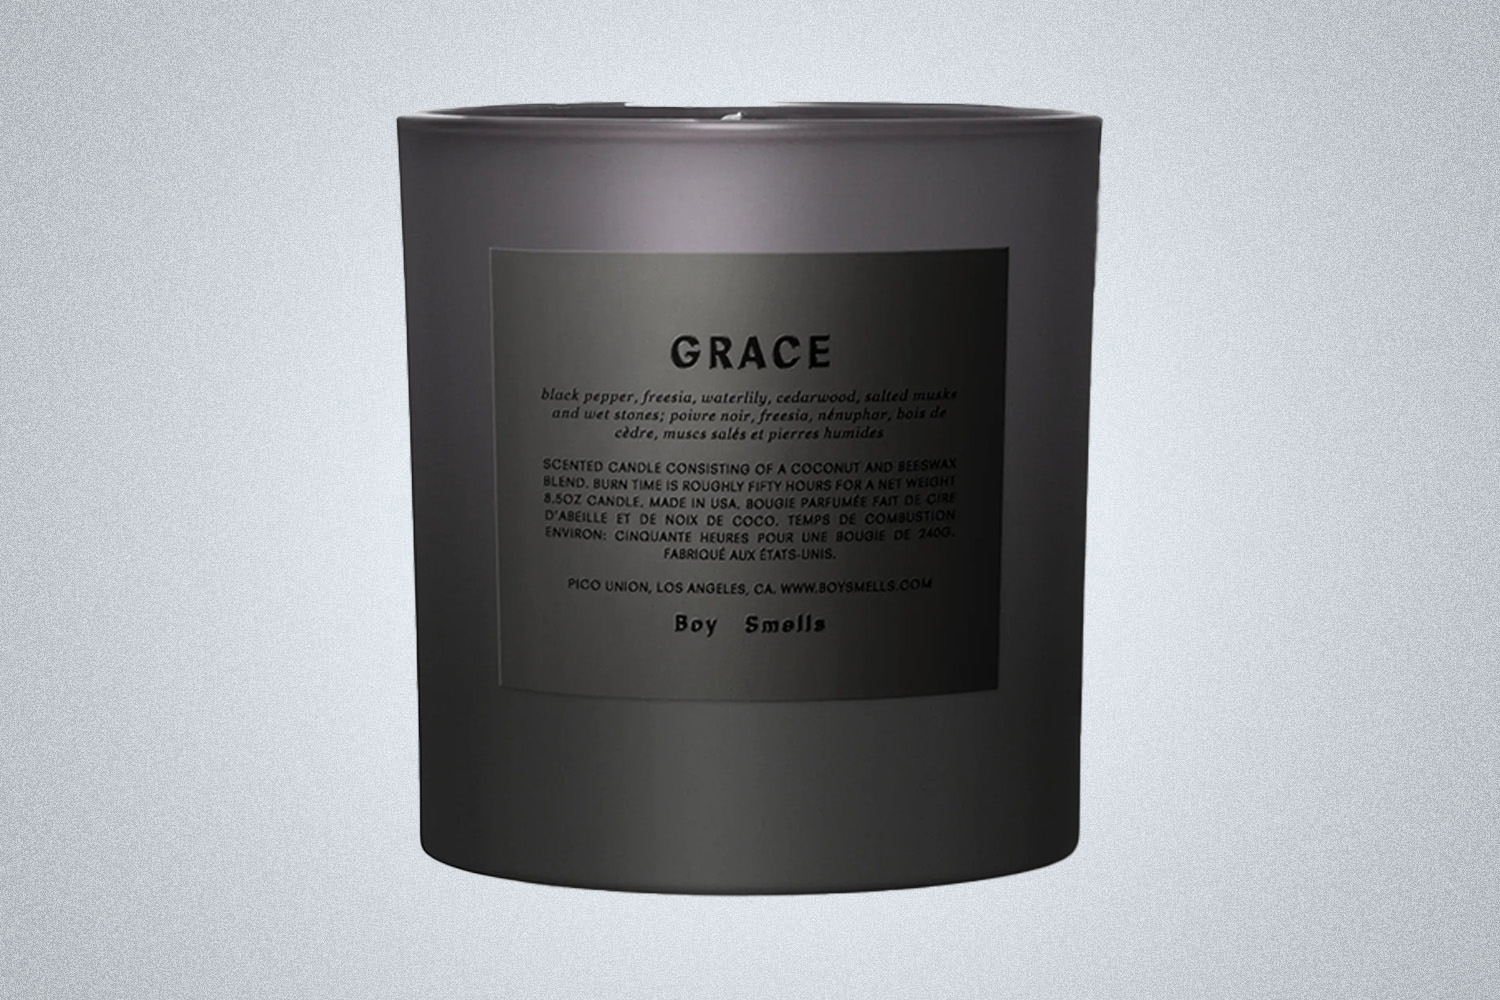 a black "Grace" candle by Boy Smells on a grey background